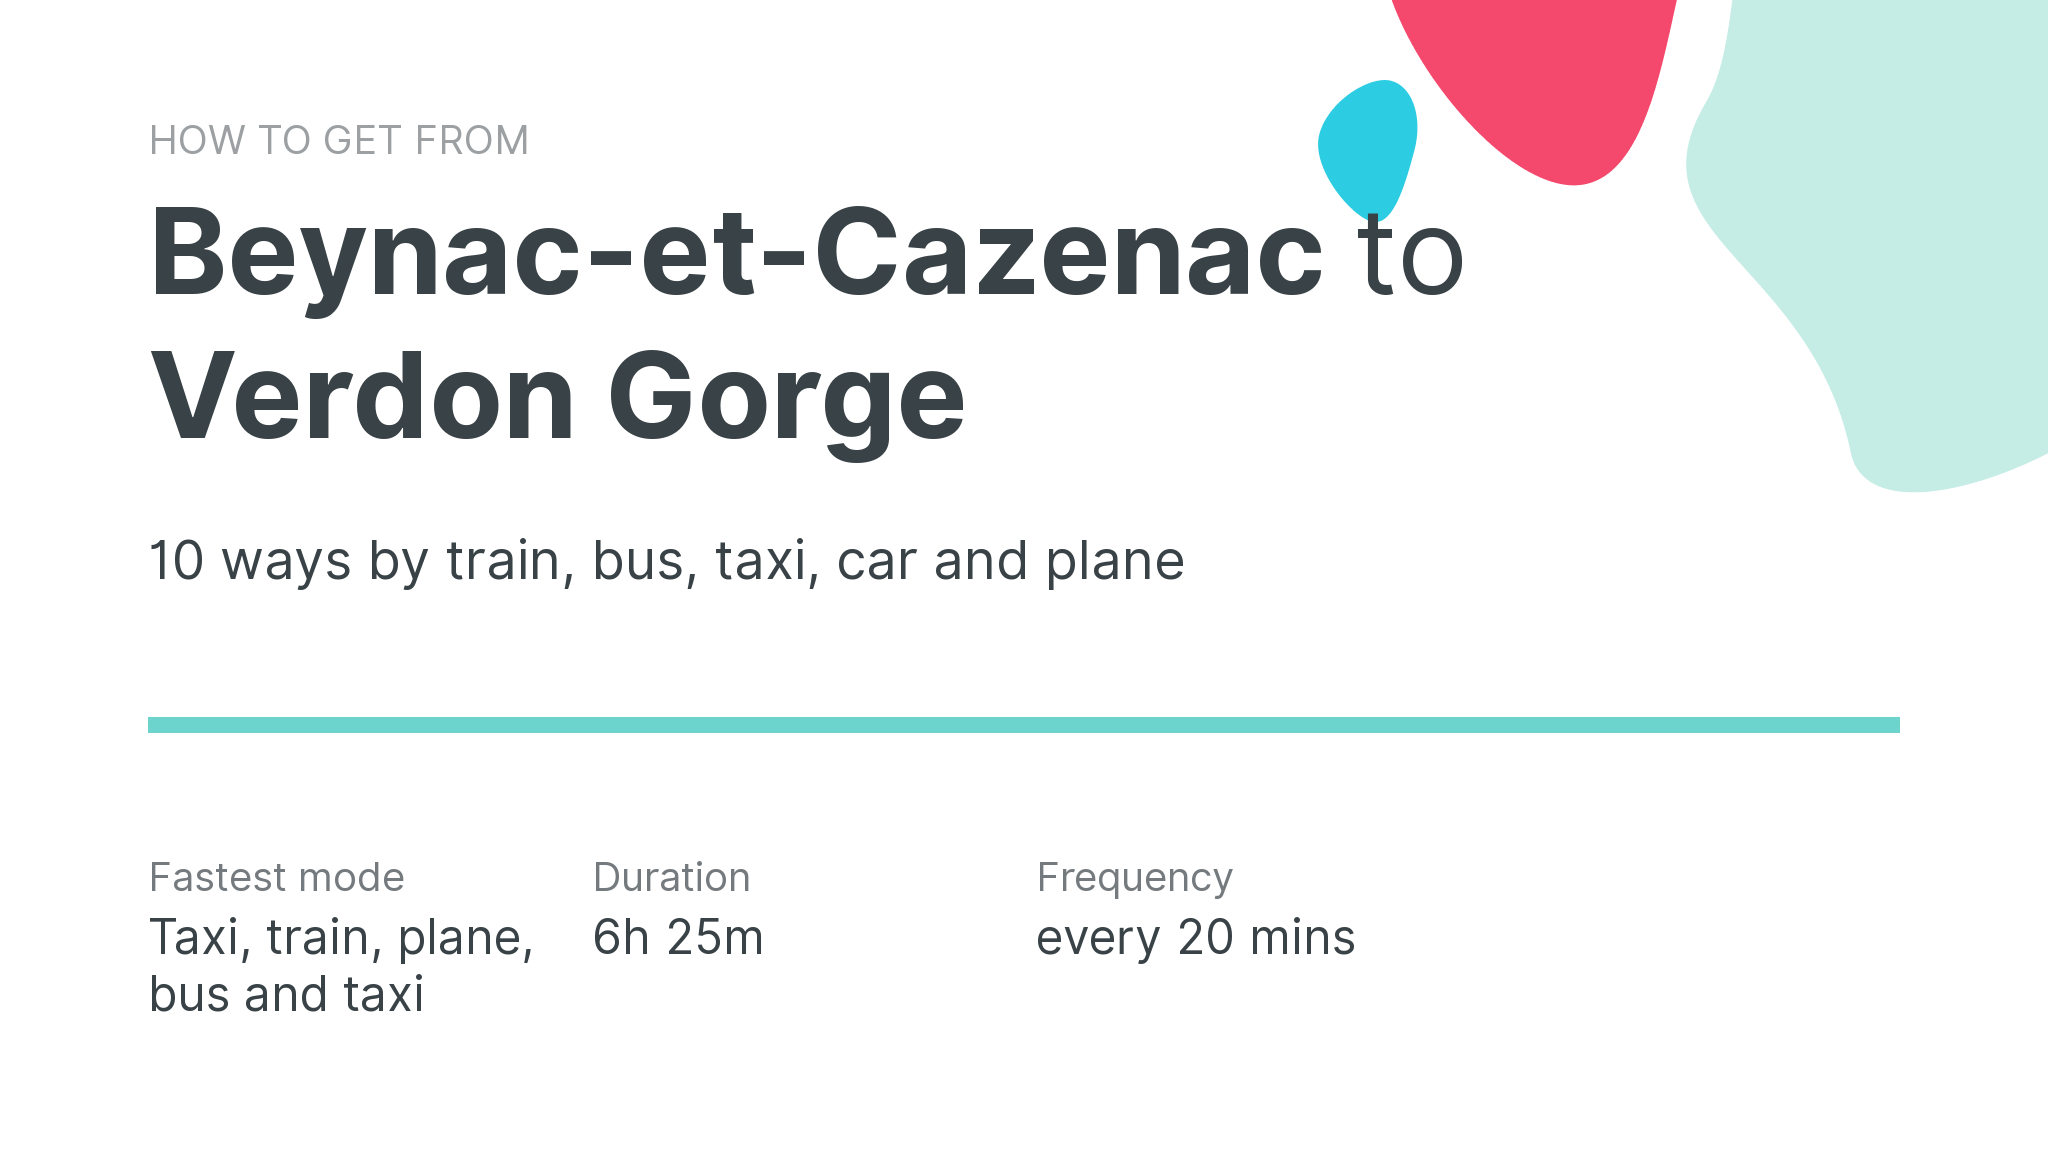 How do I get from Beynac-et-Cazenac to Verdon Gorge